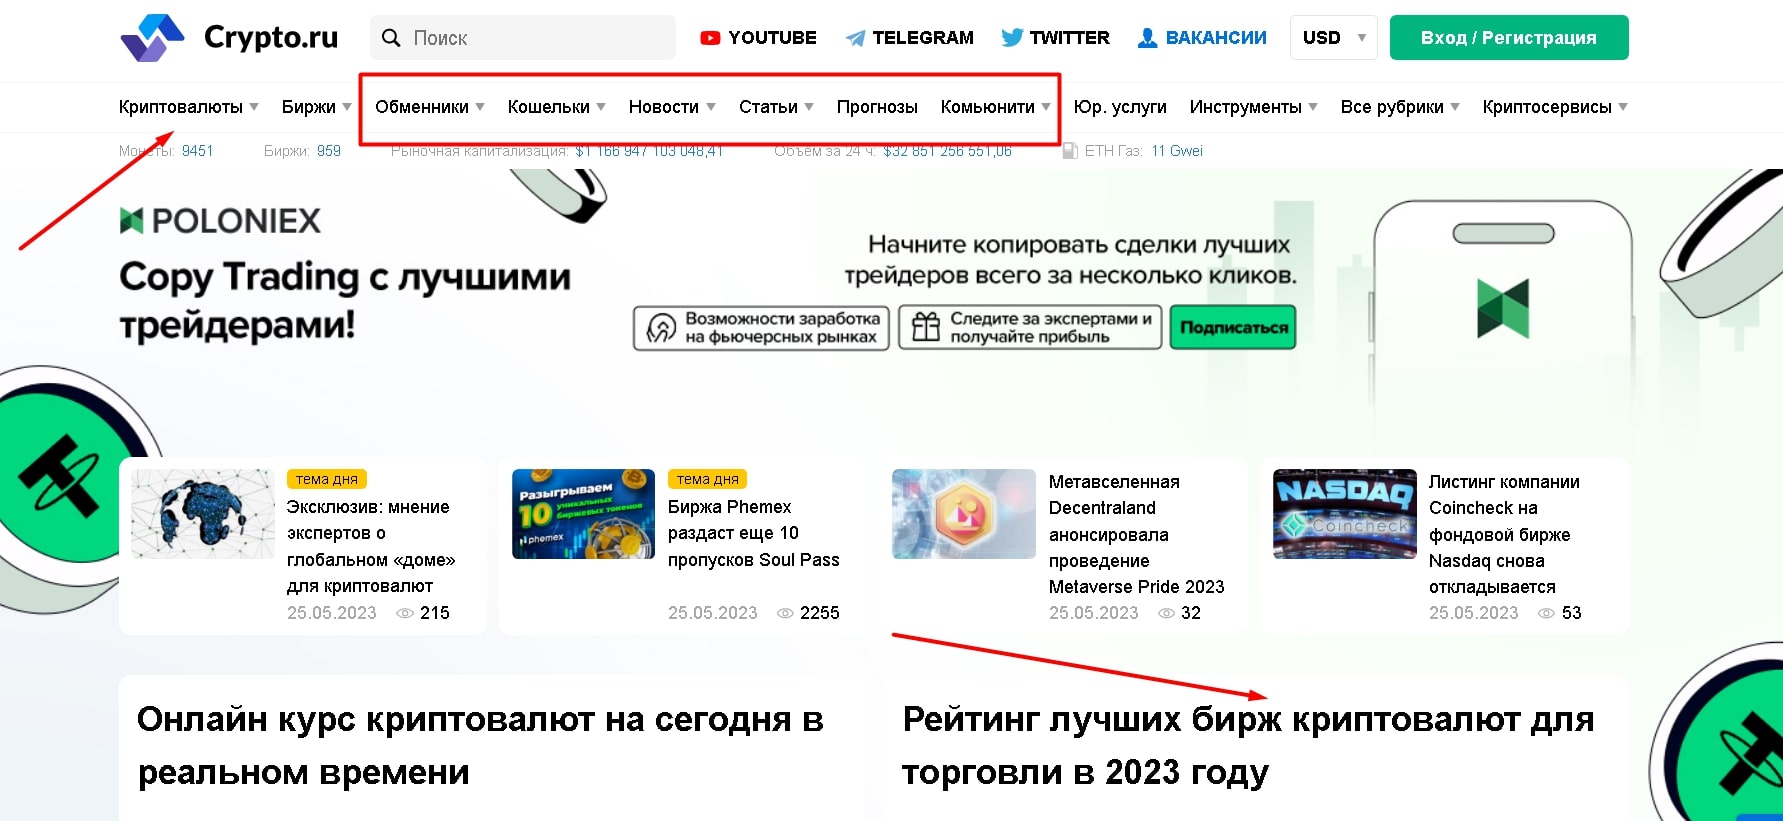 Crypto.ru сайт